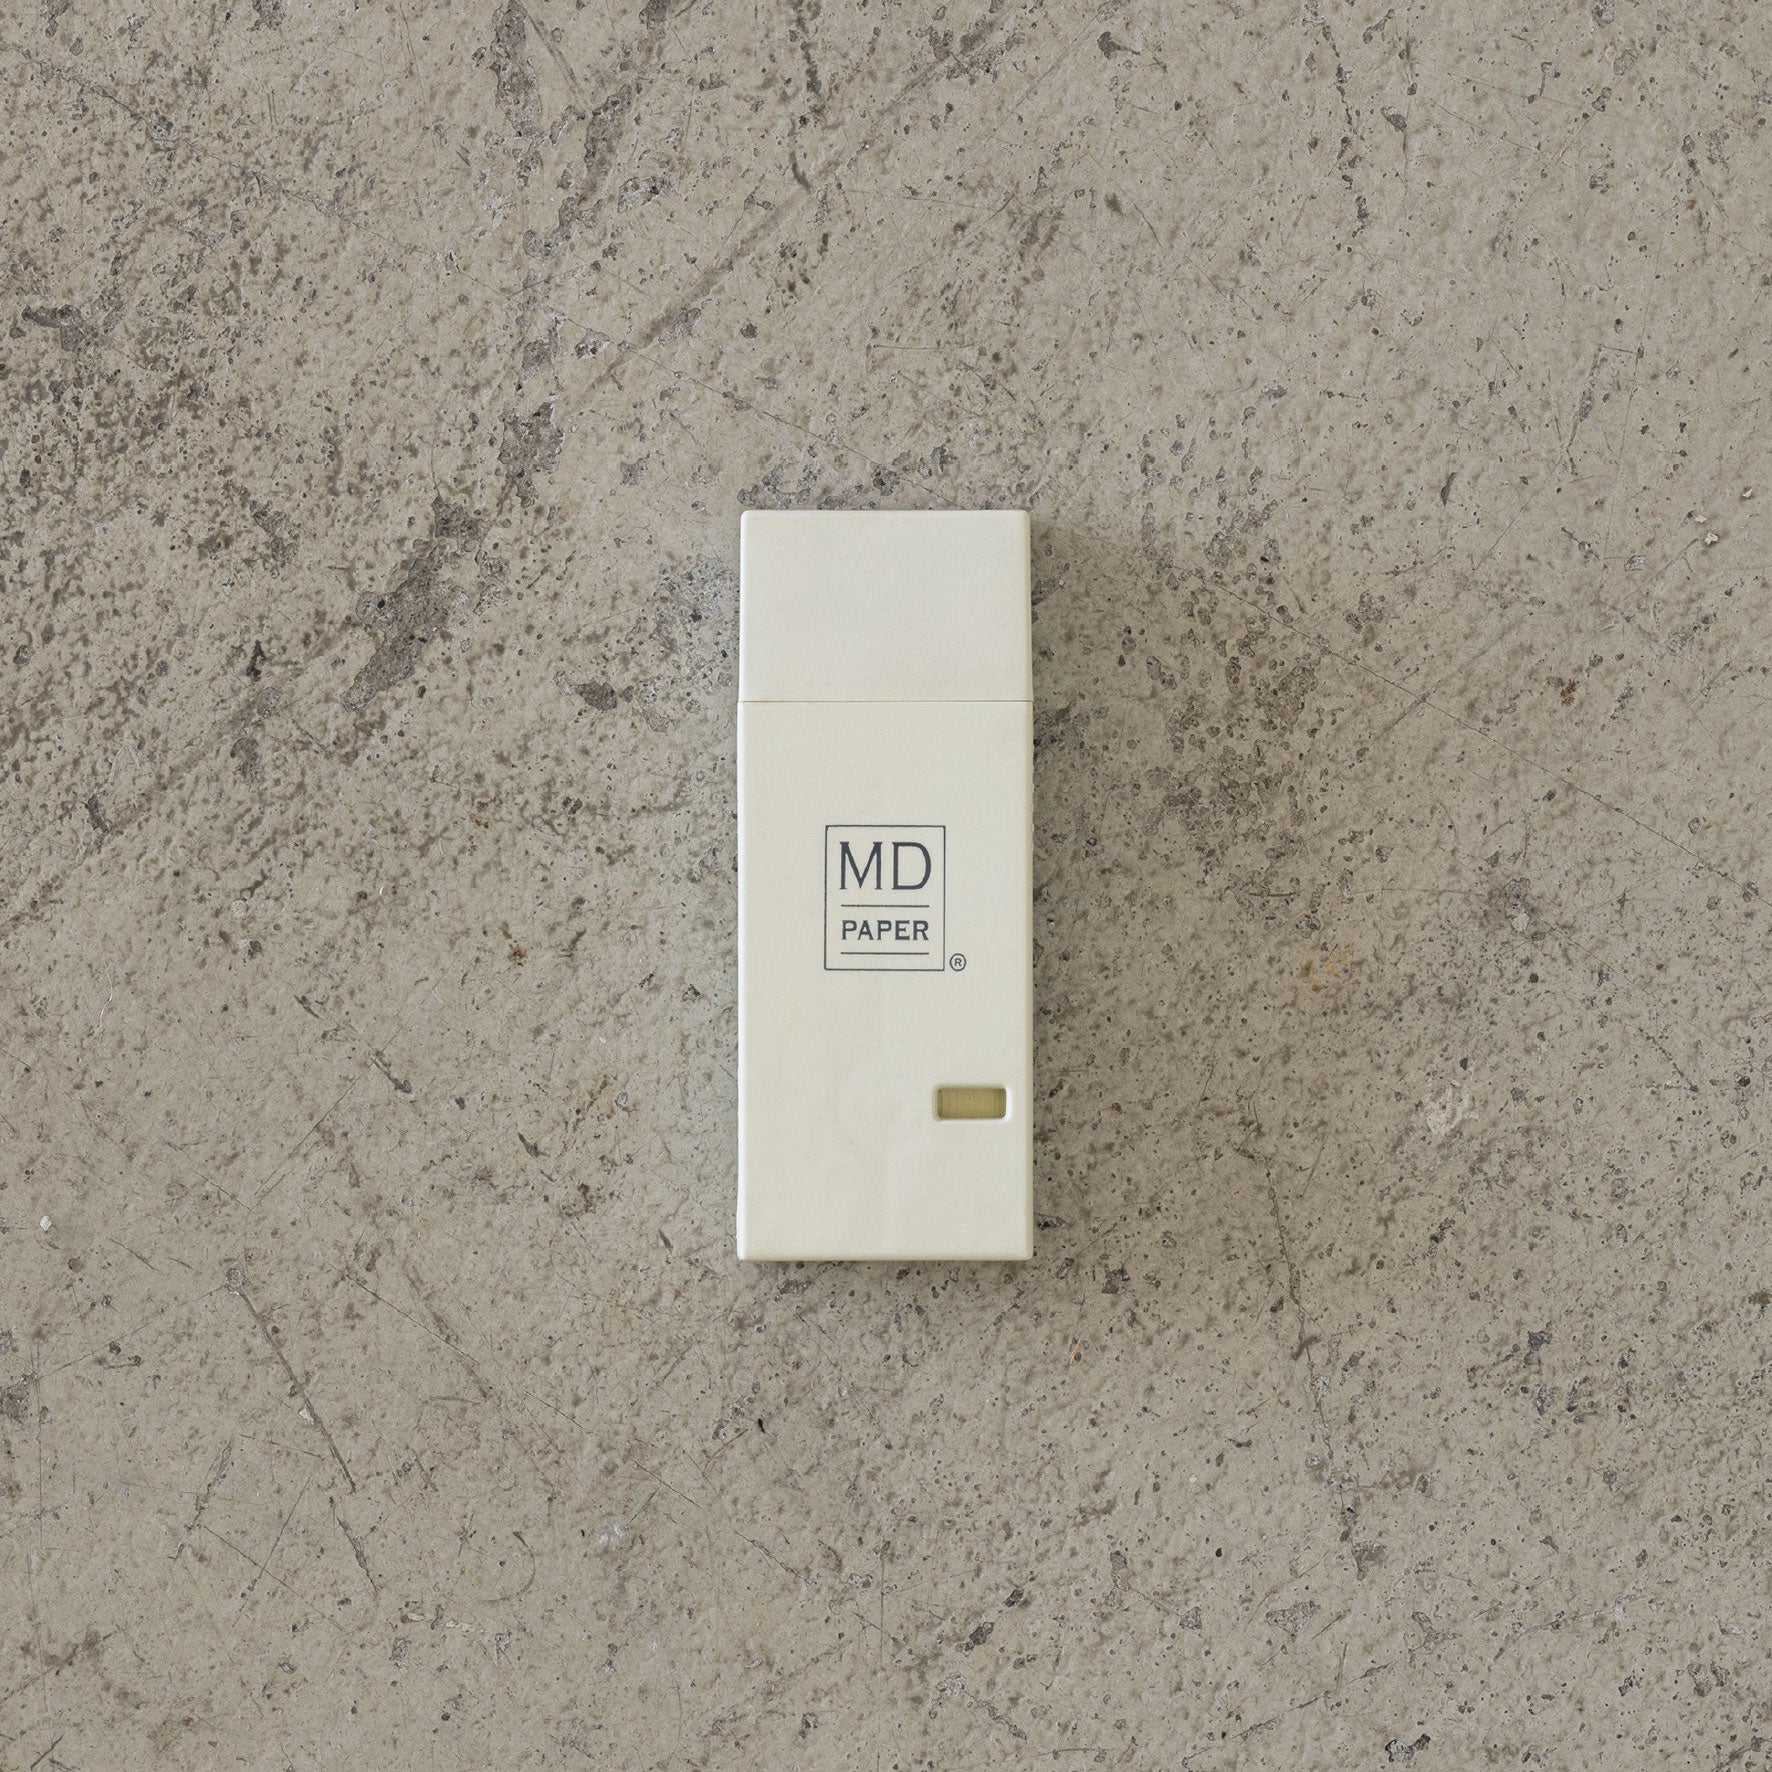 Midori - Correction Tape - MD 6mm